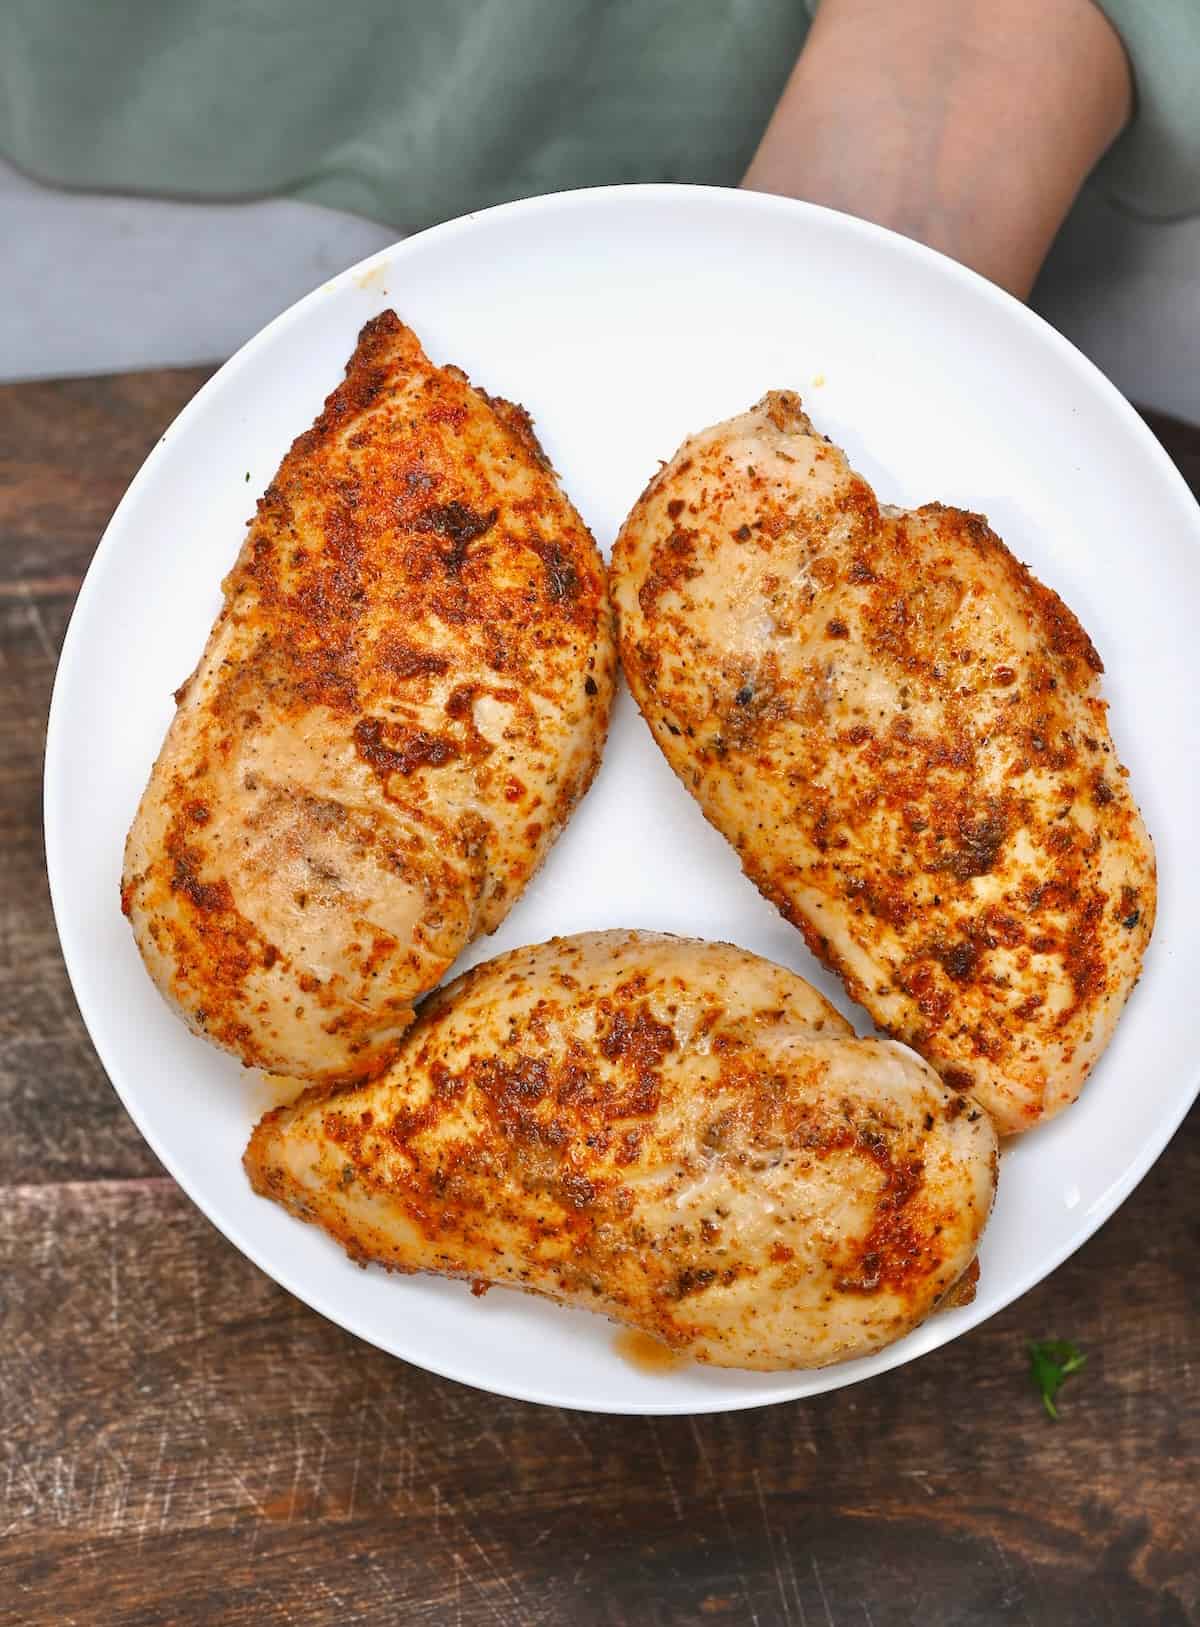 JUICY Air Fryer Chicken Breast - The Recipe Rebel